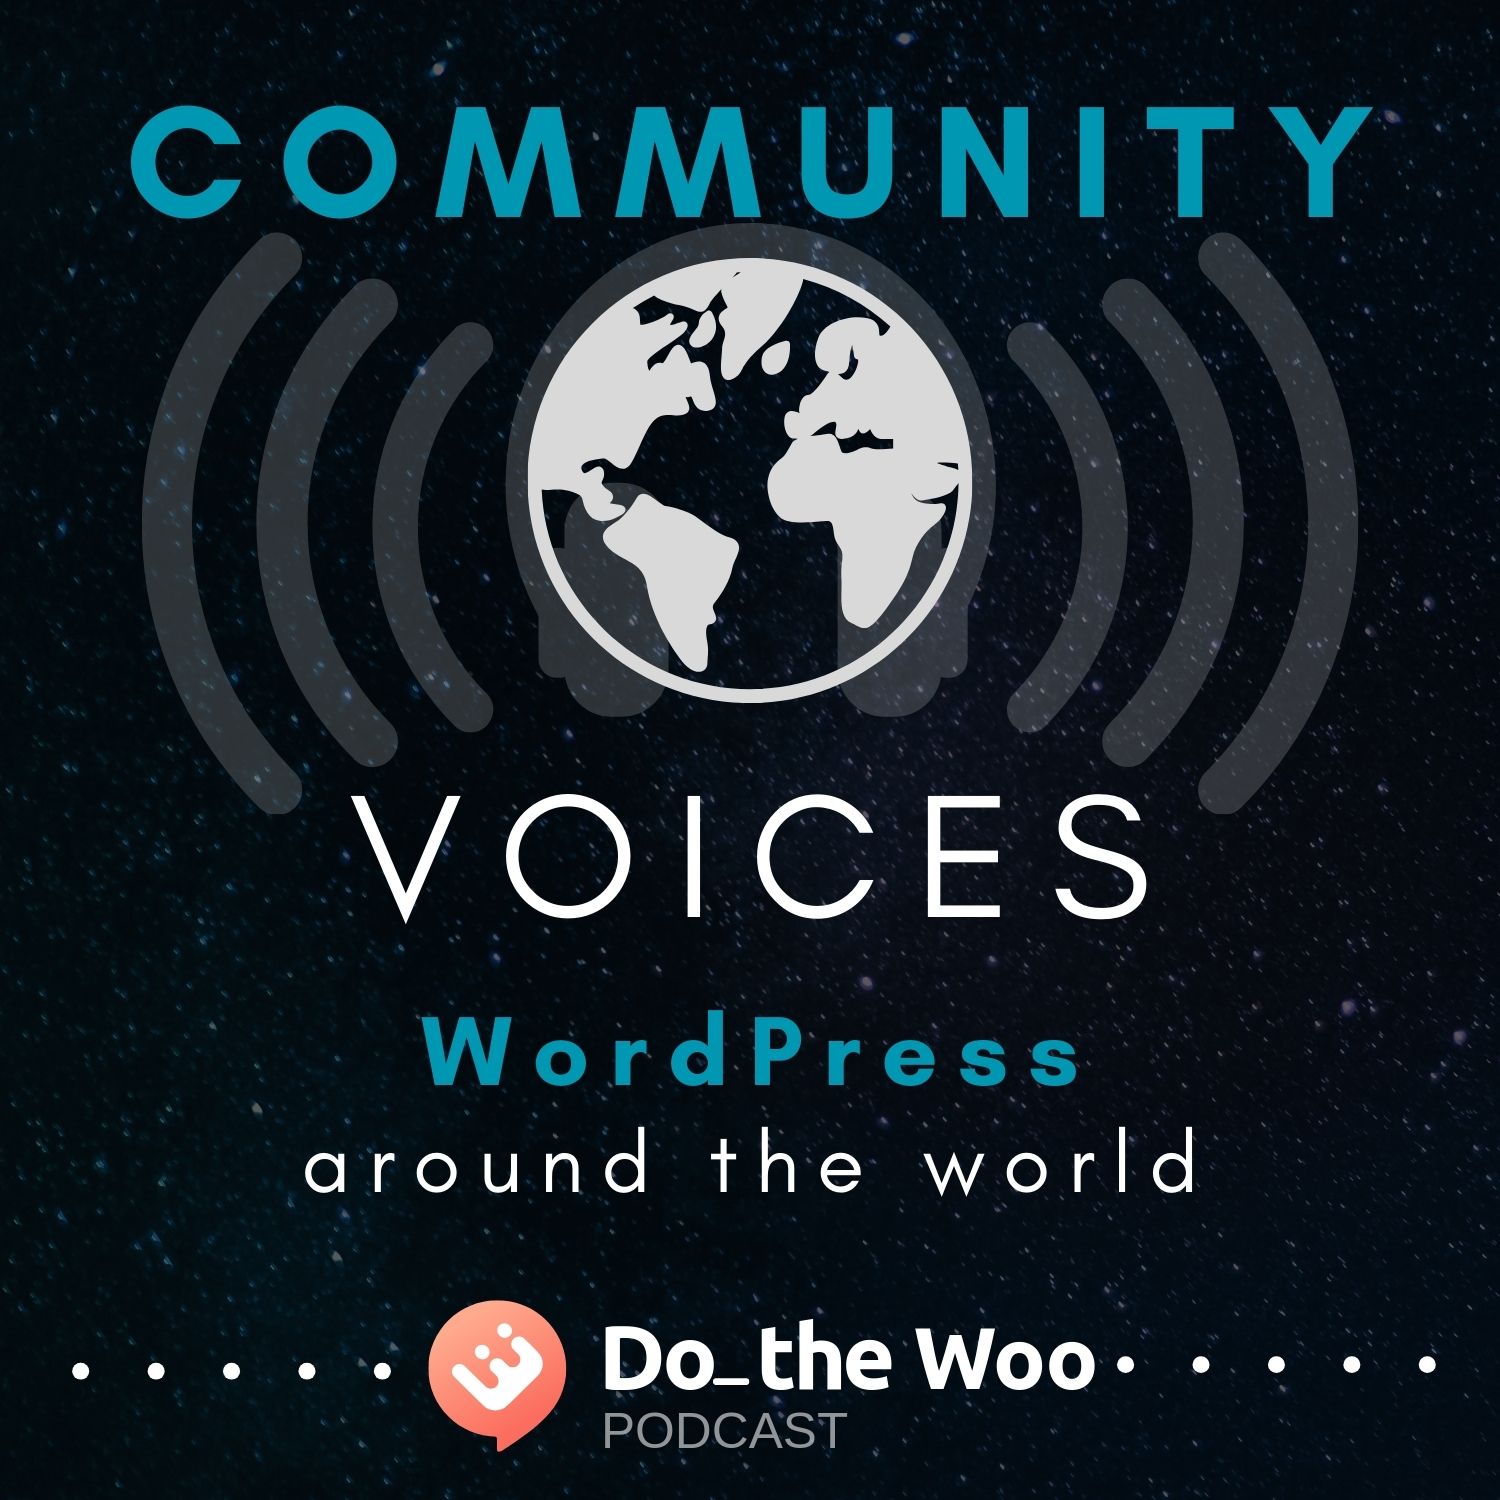 Community Voices WordPress Around the World